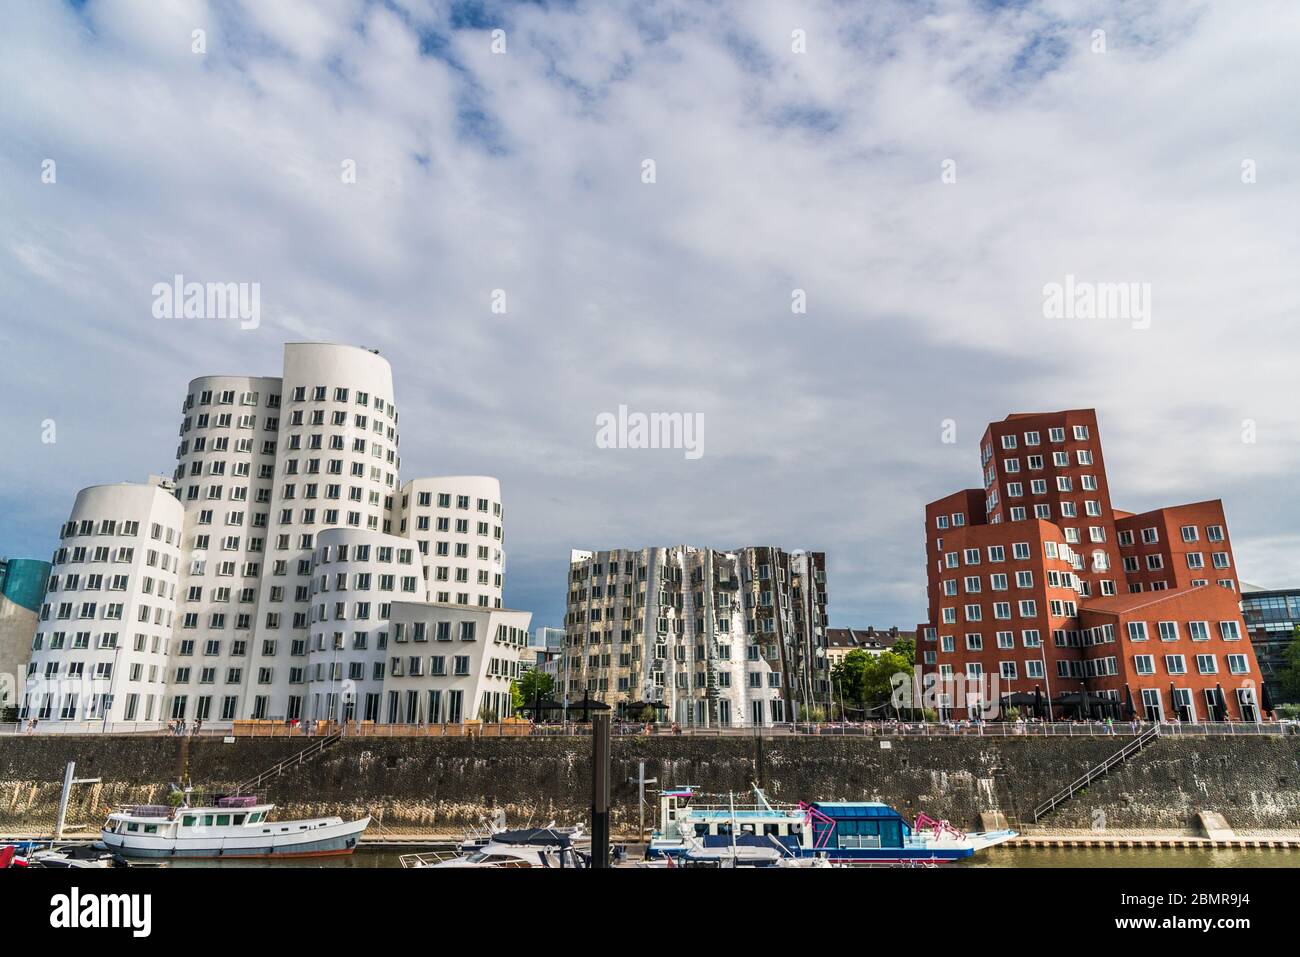 View at Medienhafen Zollhof district in Dusseldorf, Germany. Stock Photo